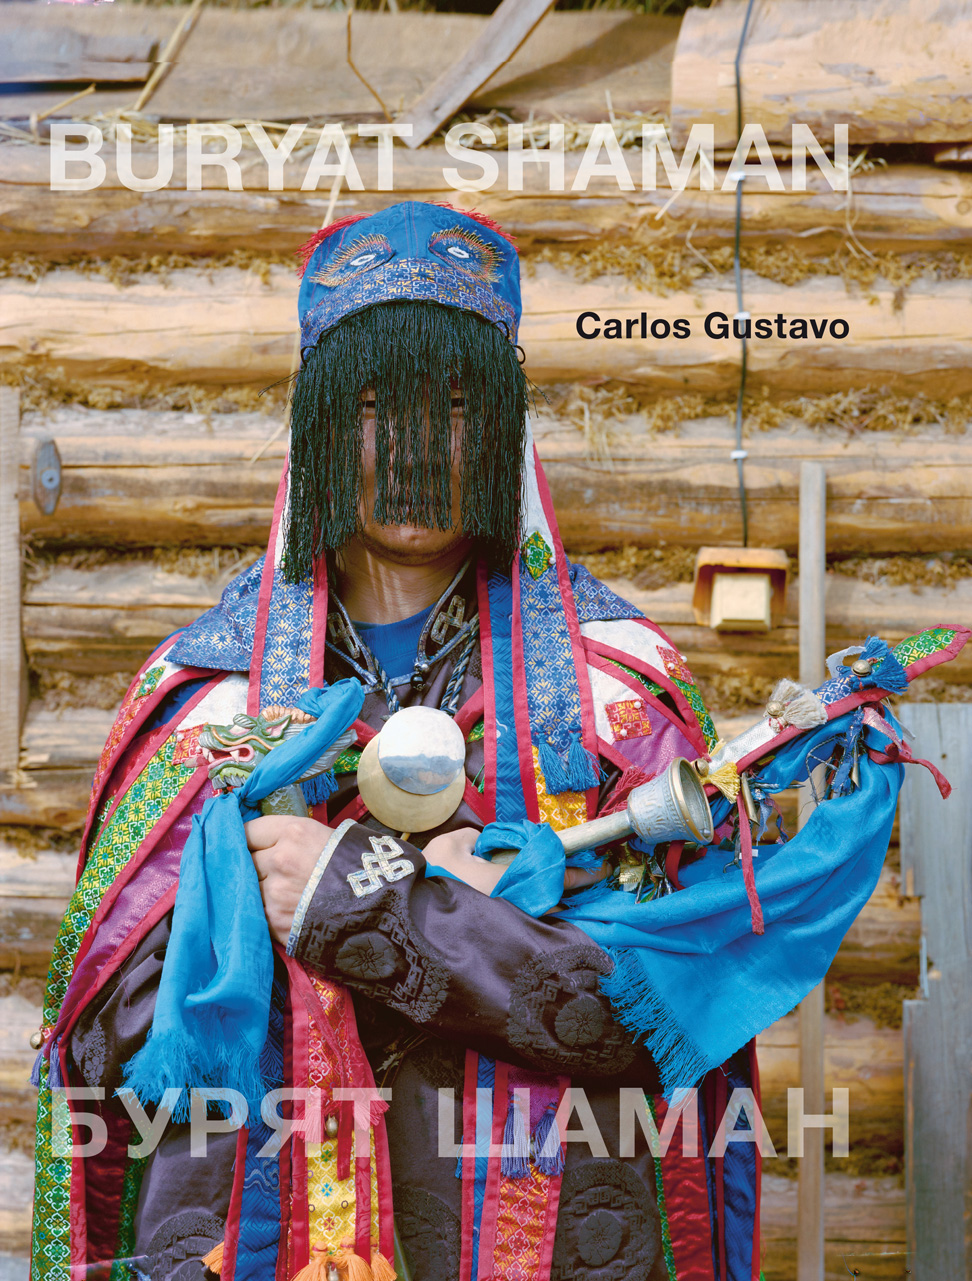 Buryat Shaman, Carlos Gustavo. Till Schaap Edition. La Centrale